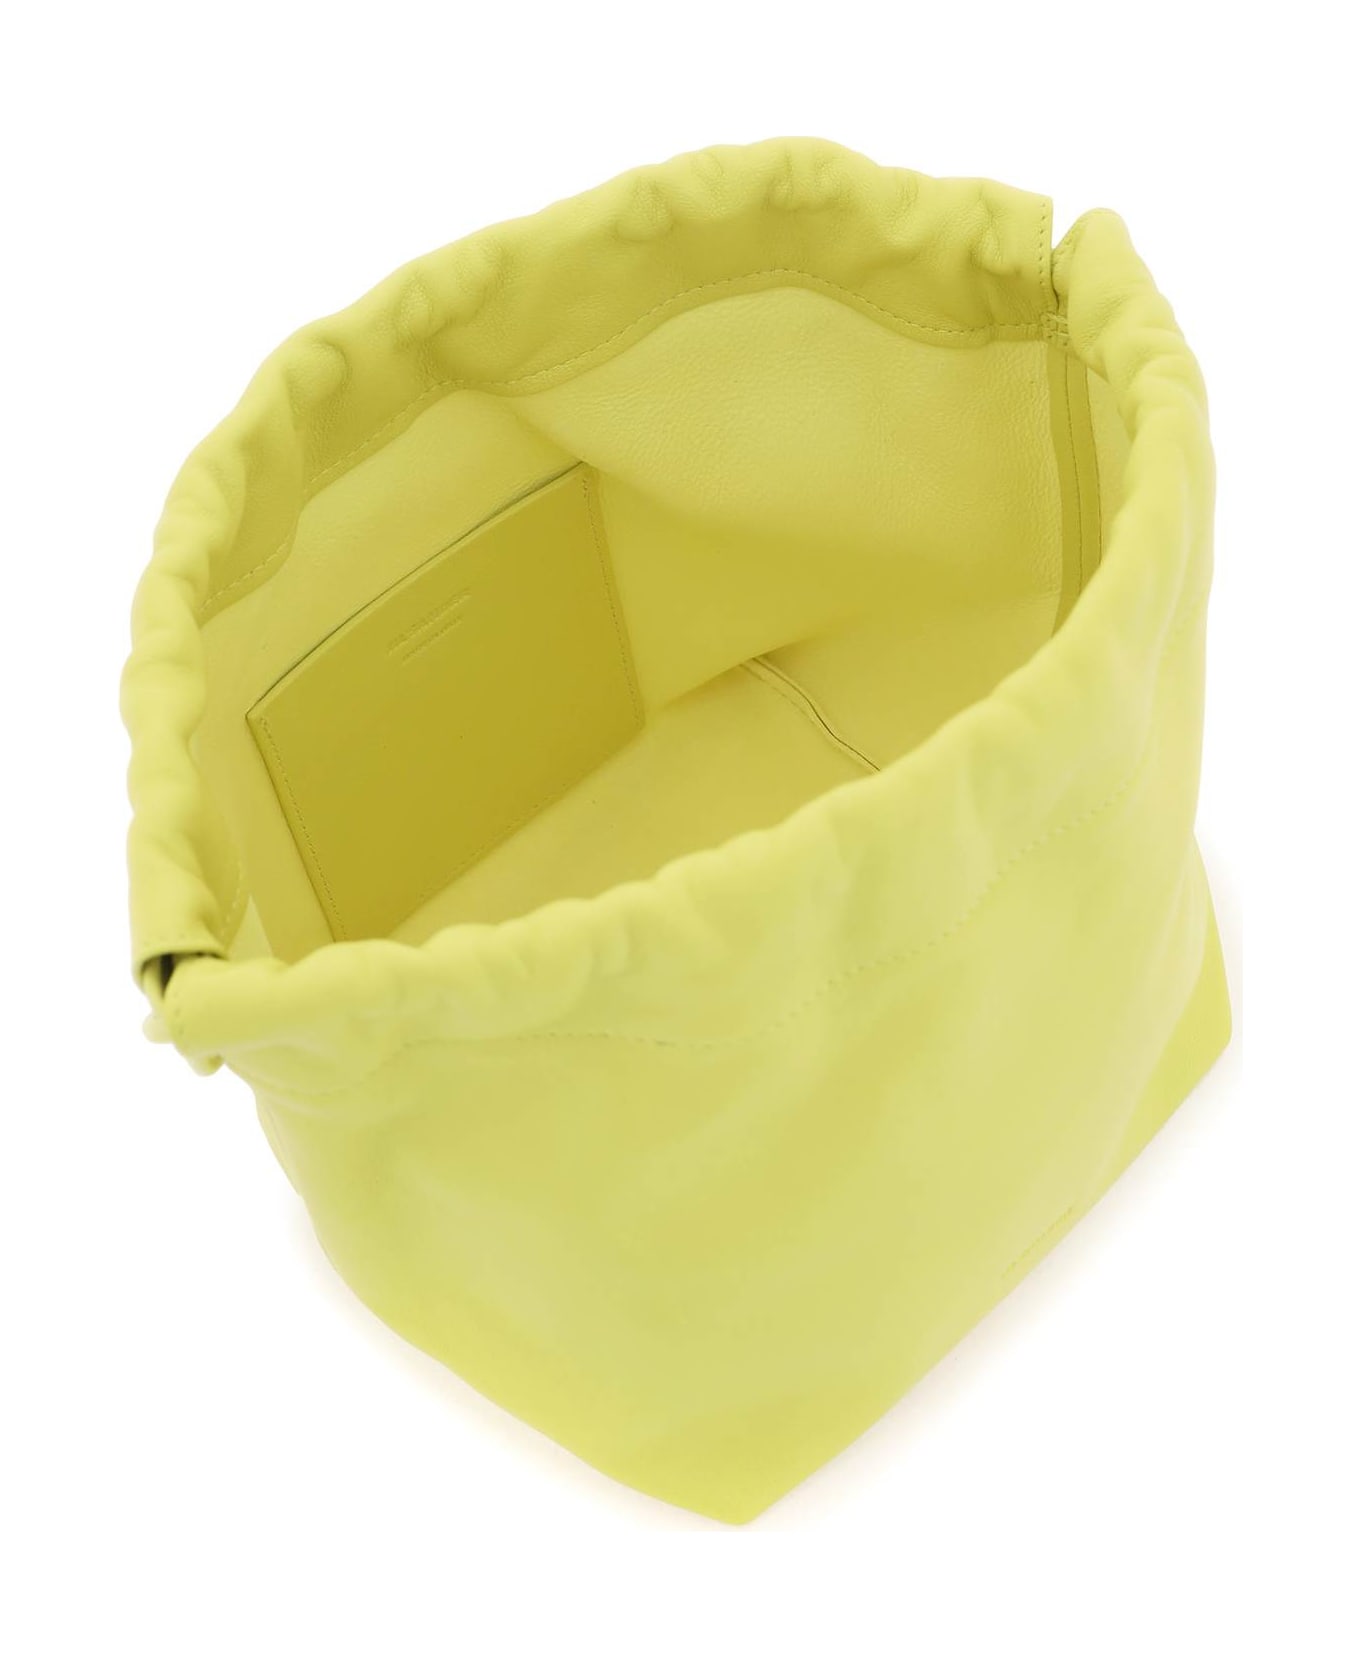 Jil Sander Yellow Leather Bag - Green